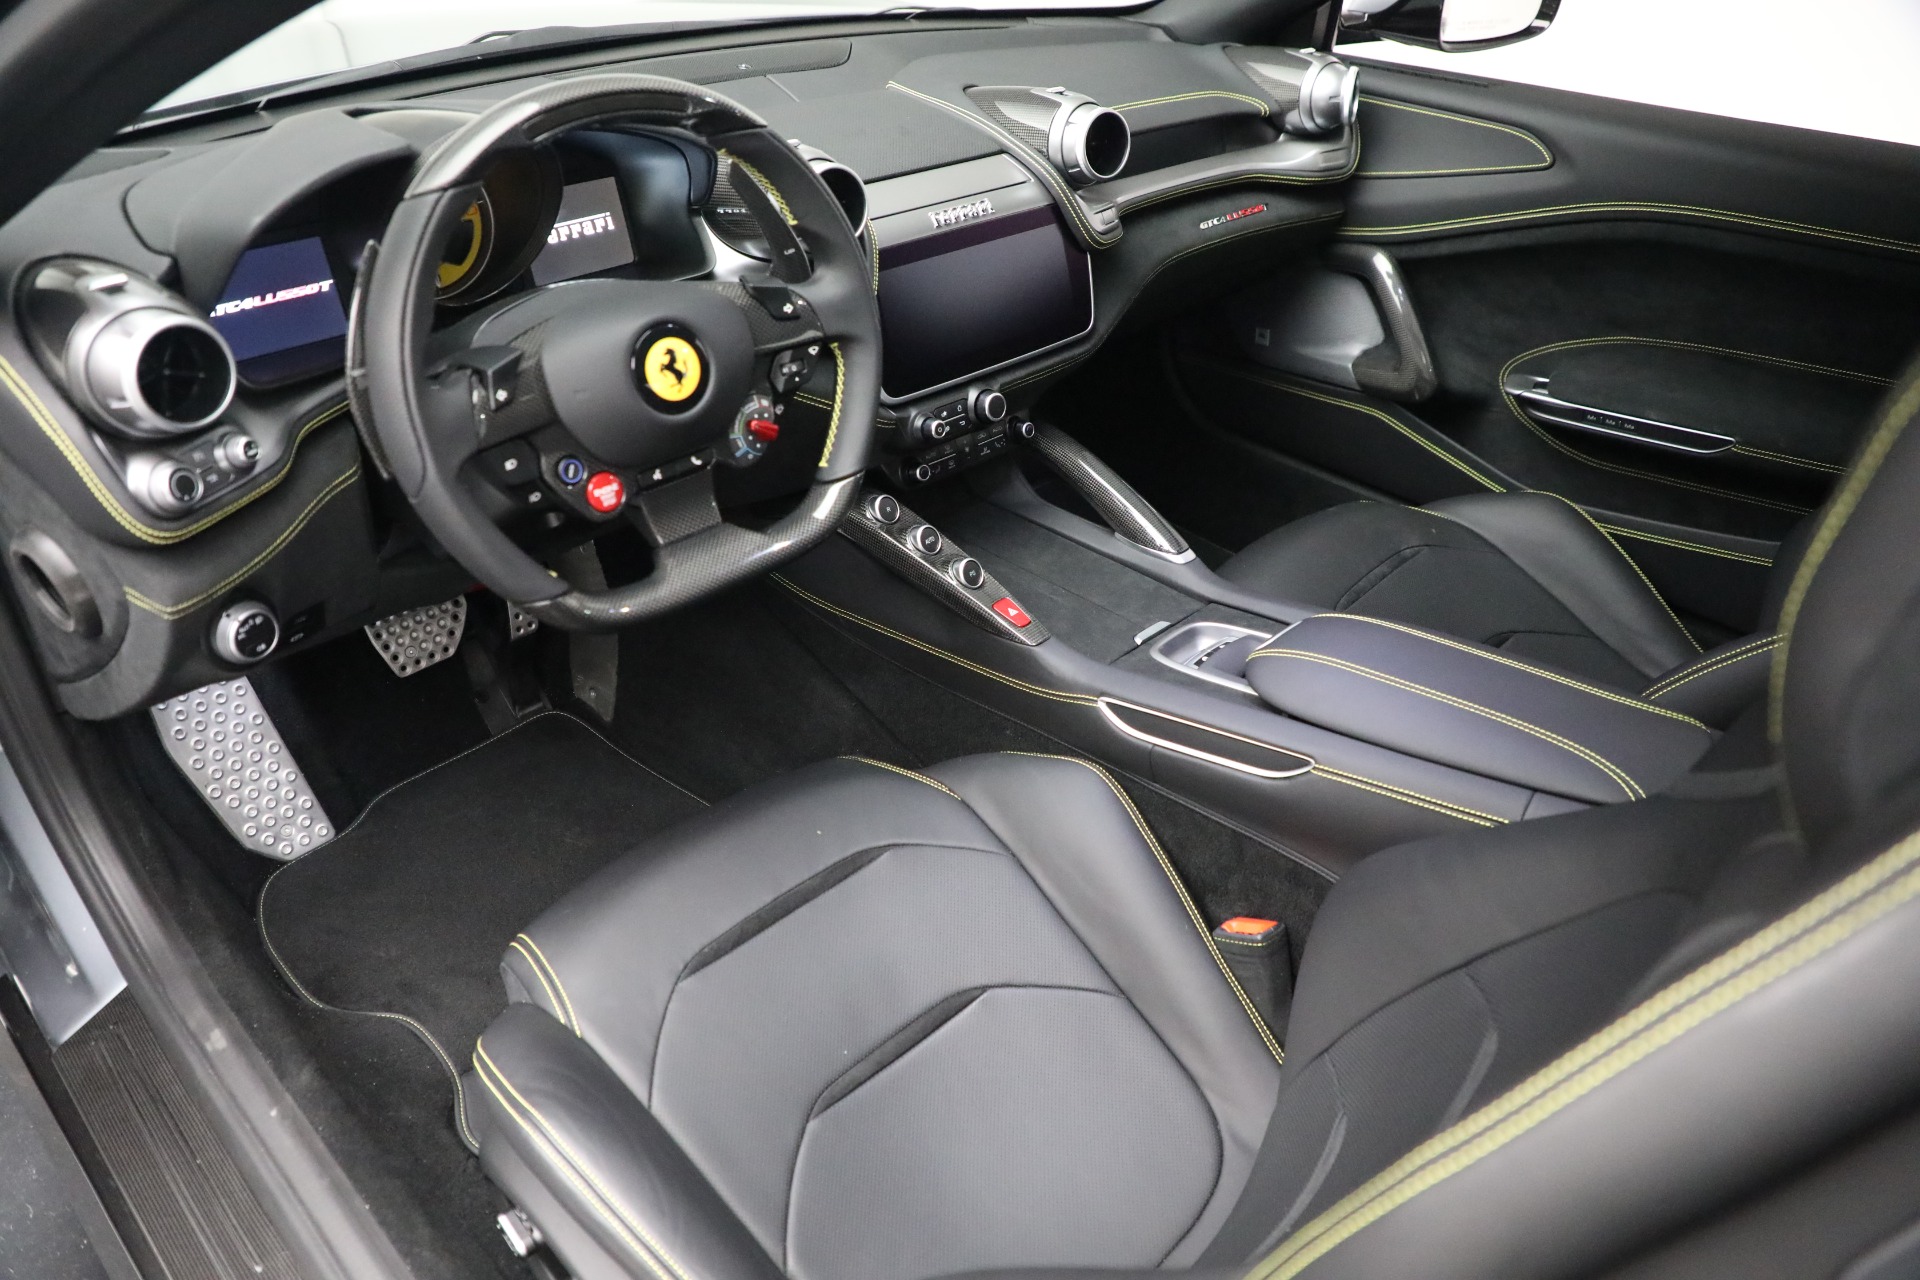 Pre-Owned 2019 Ferrari GTC4Lusso T For Sale | Ferrari of Greenwich 